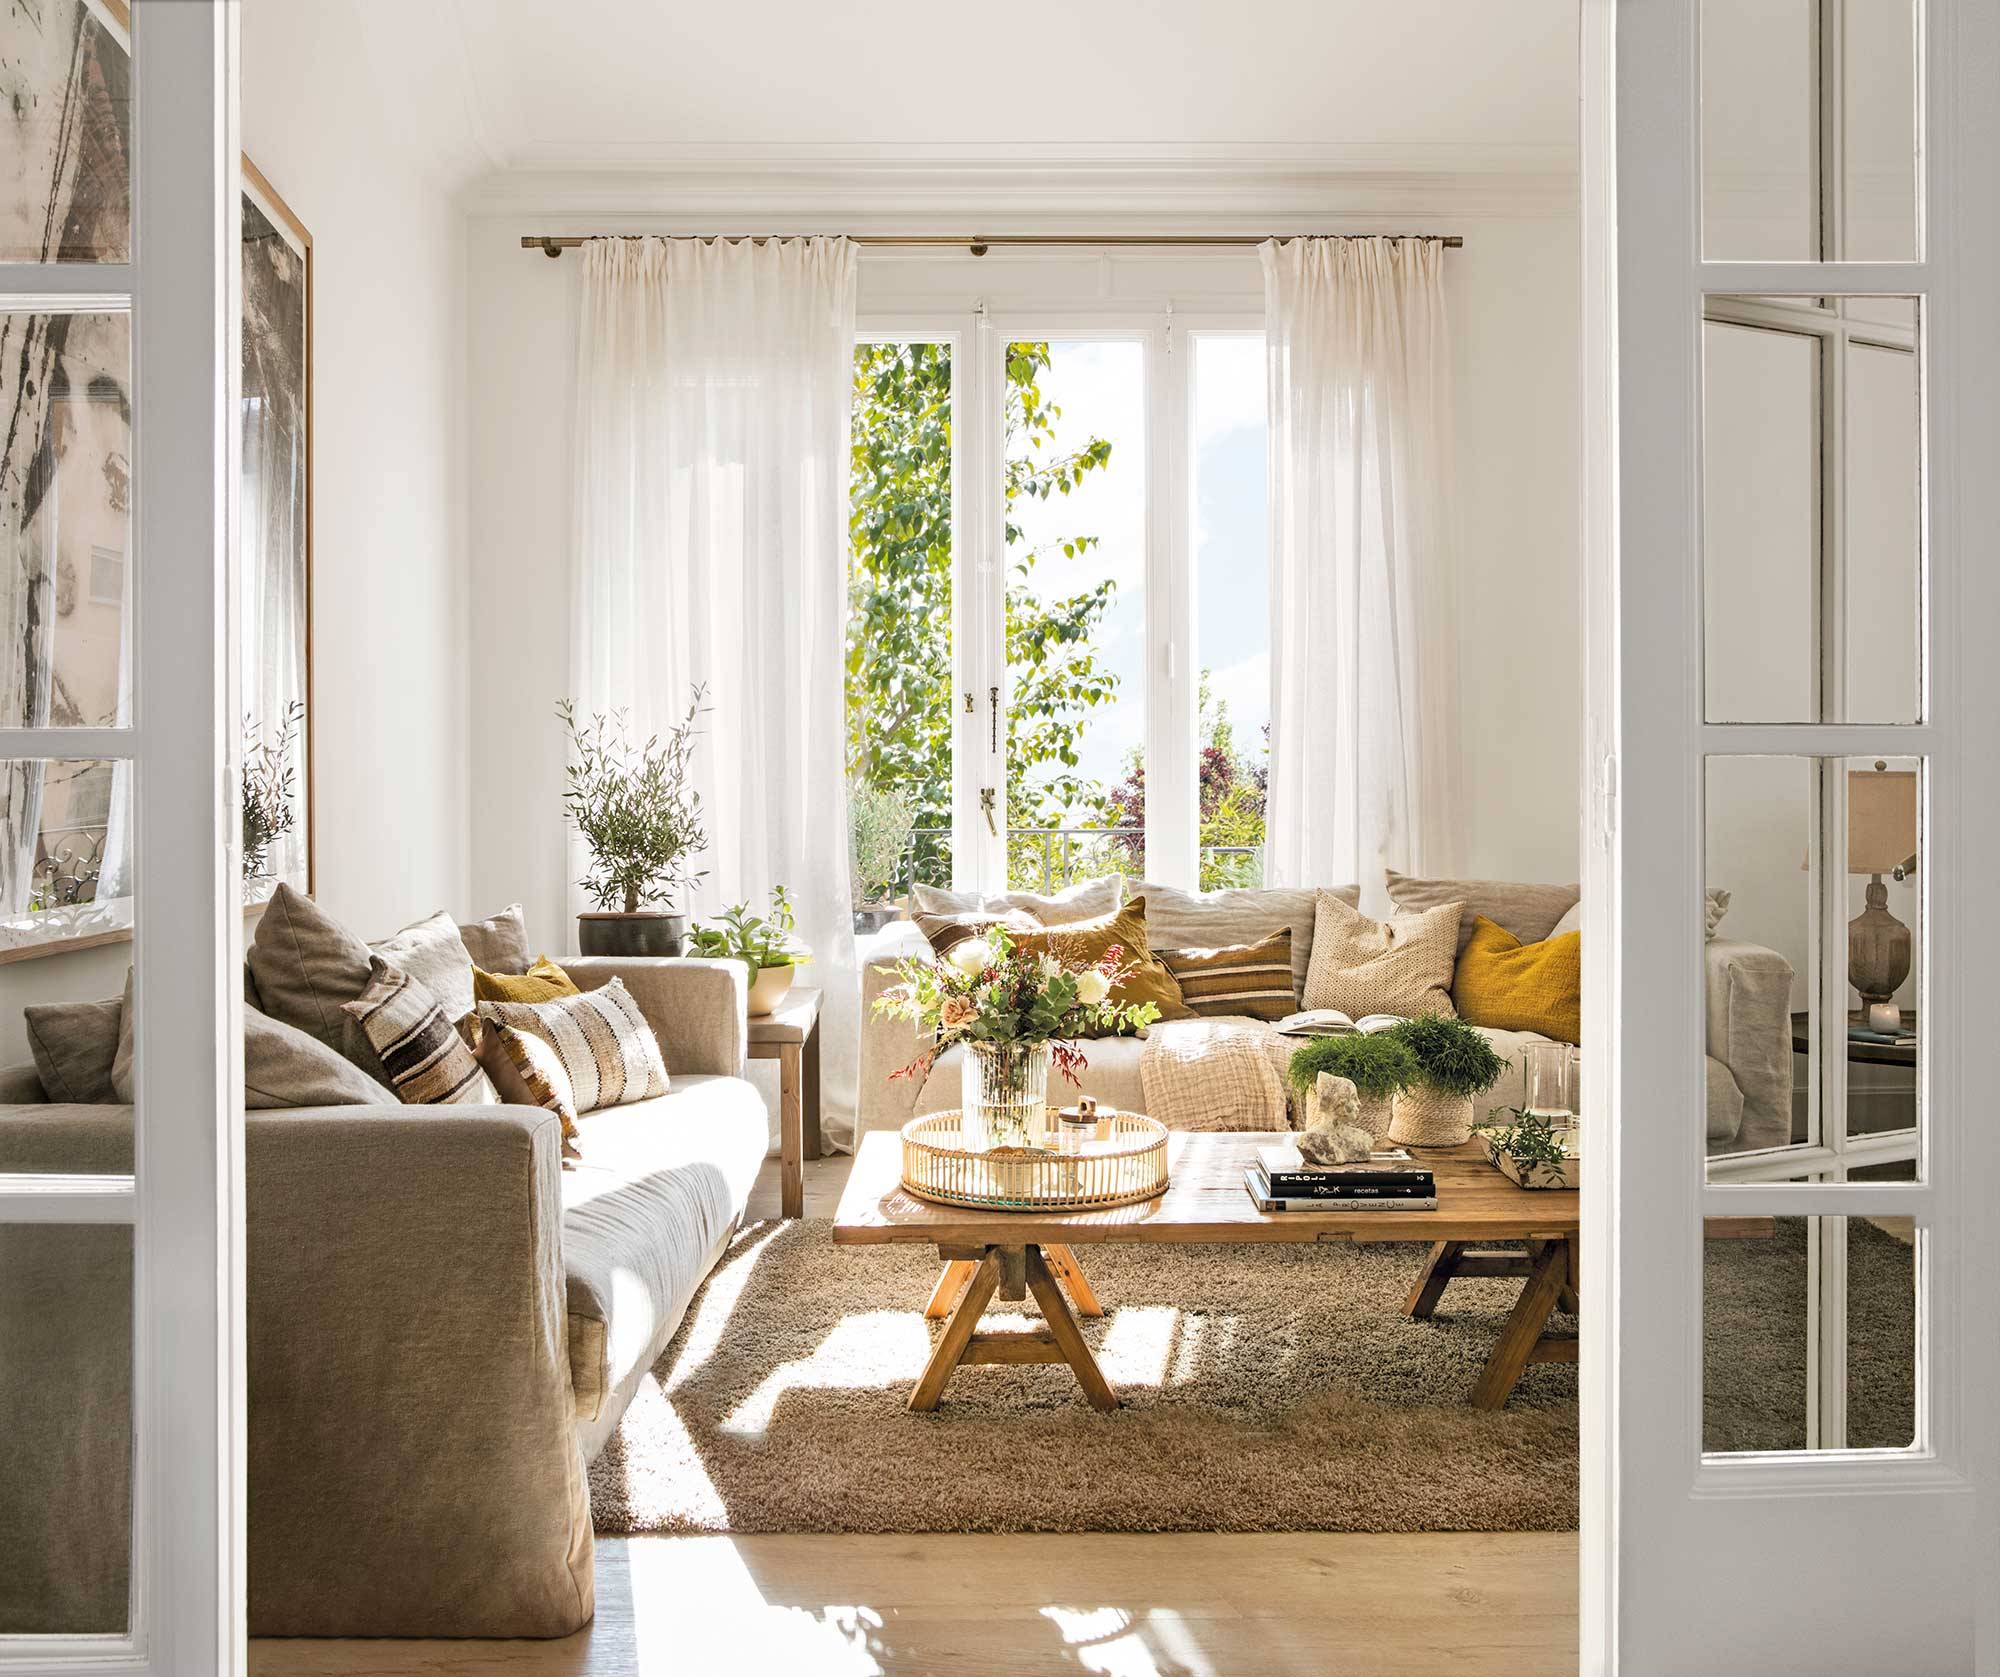 Salón blanco con mesa de centro de madera, alfombra de pelo, dos sofás y ventana con cortinas.